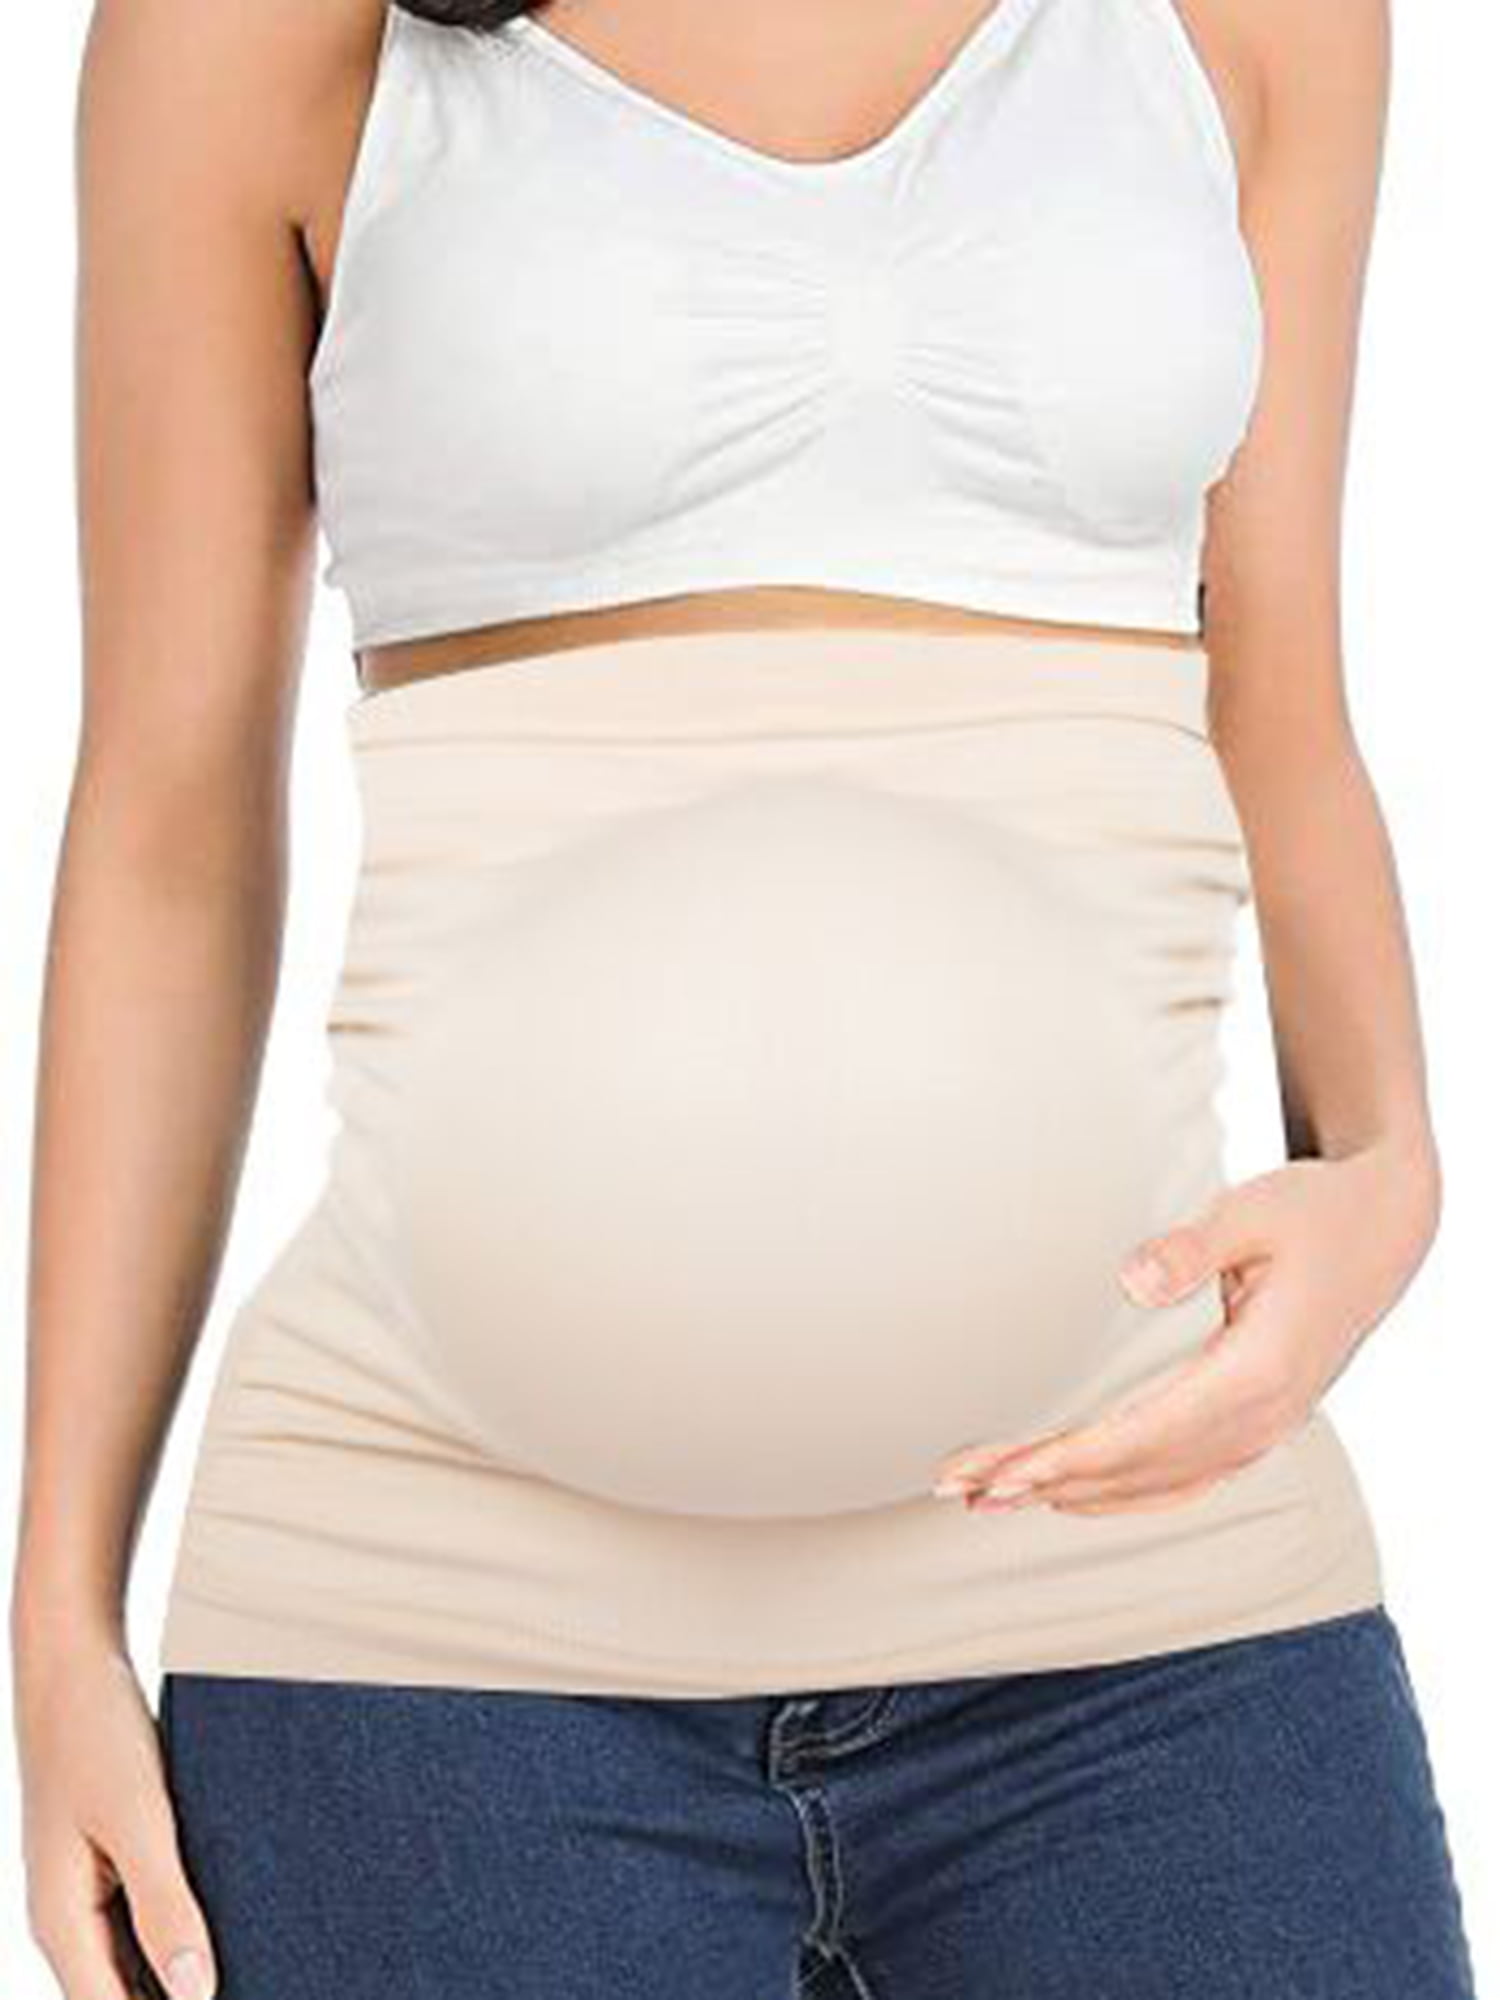 Lelinta Sayfut Plus Size Maternity Belly Band Women Abdomen Support 2031